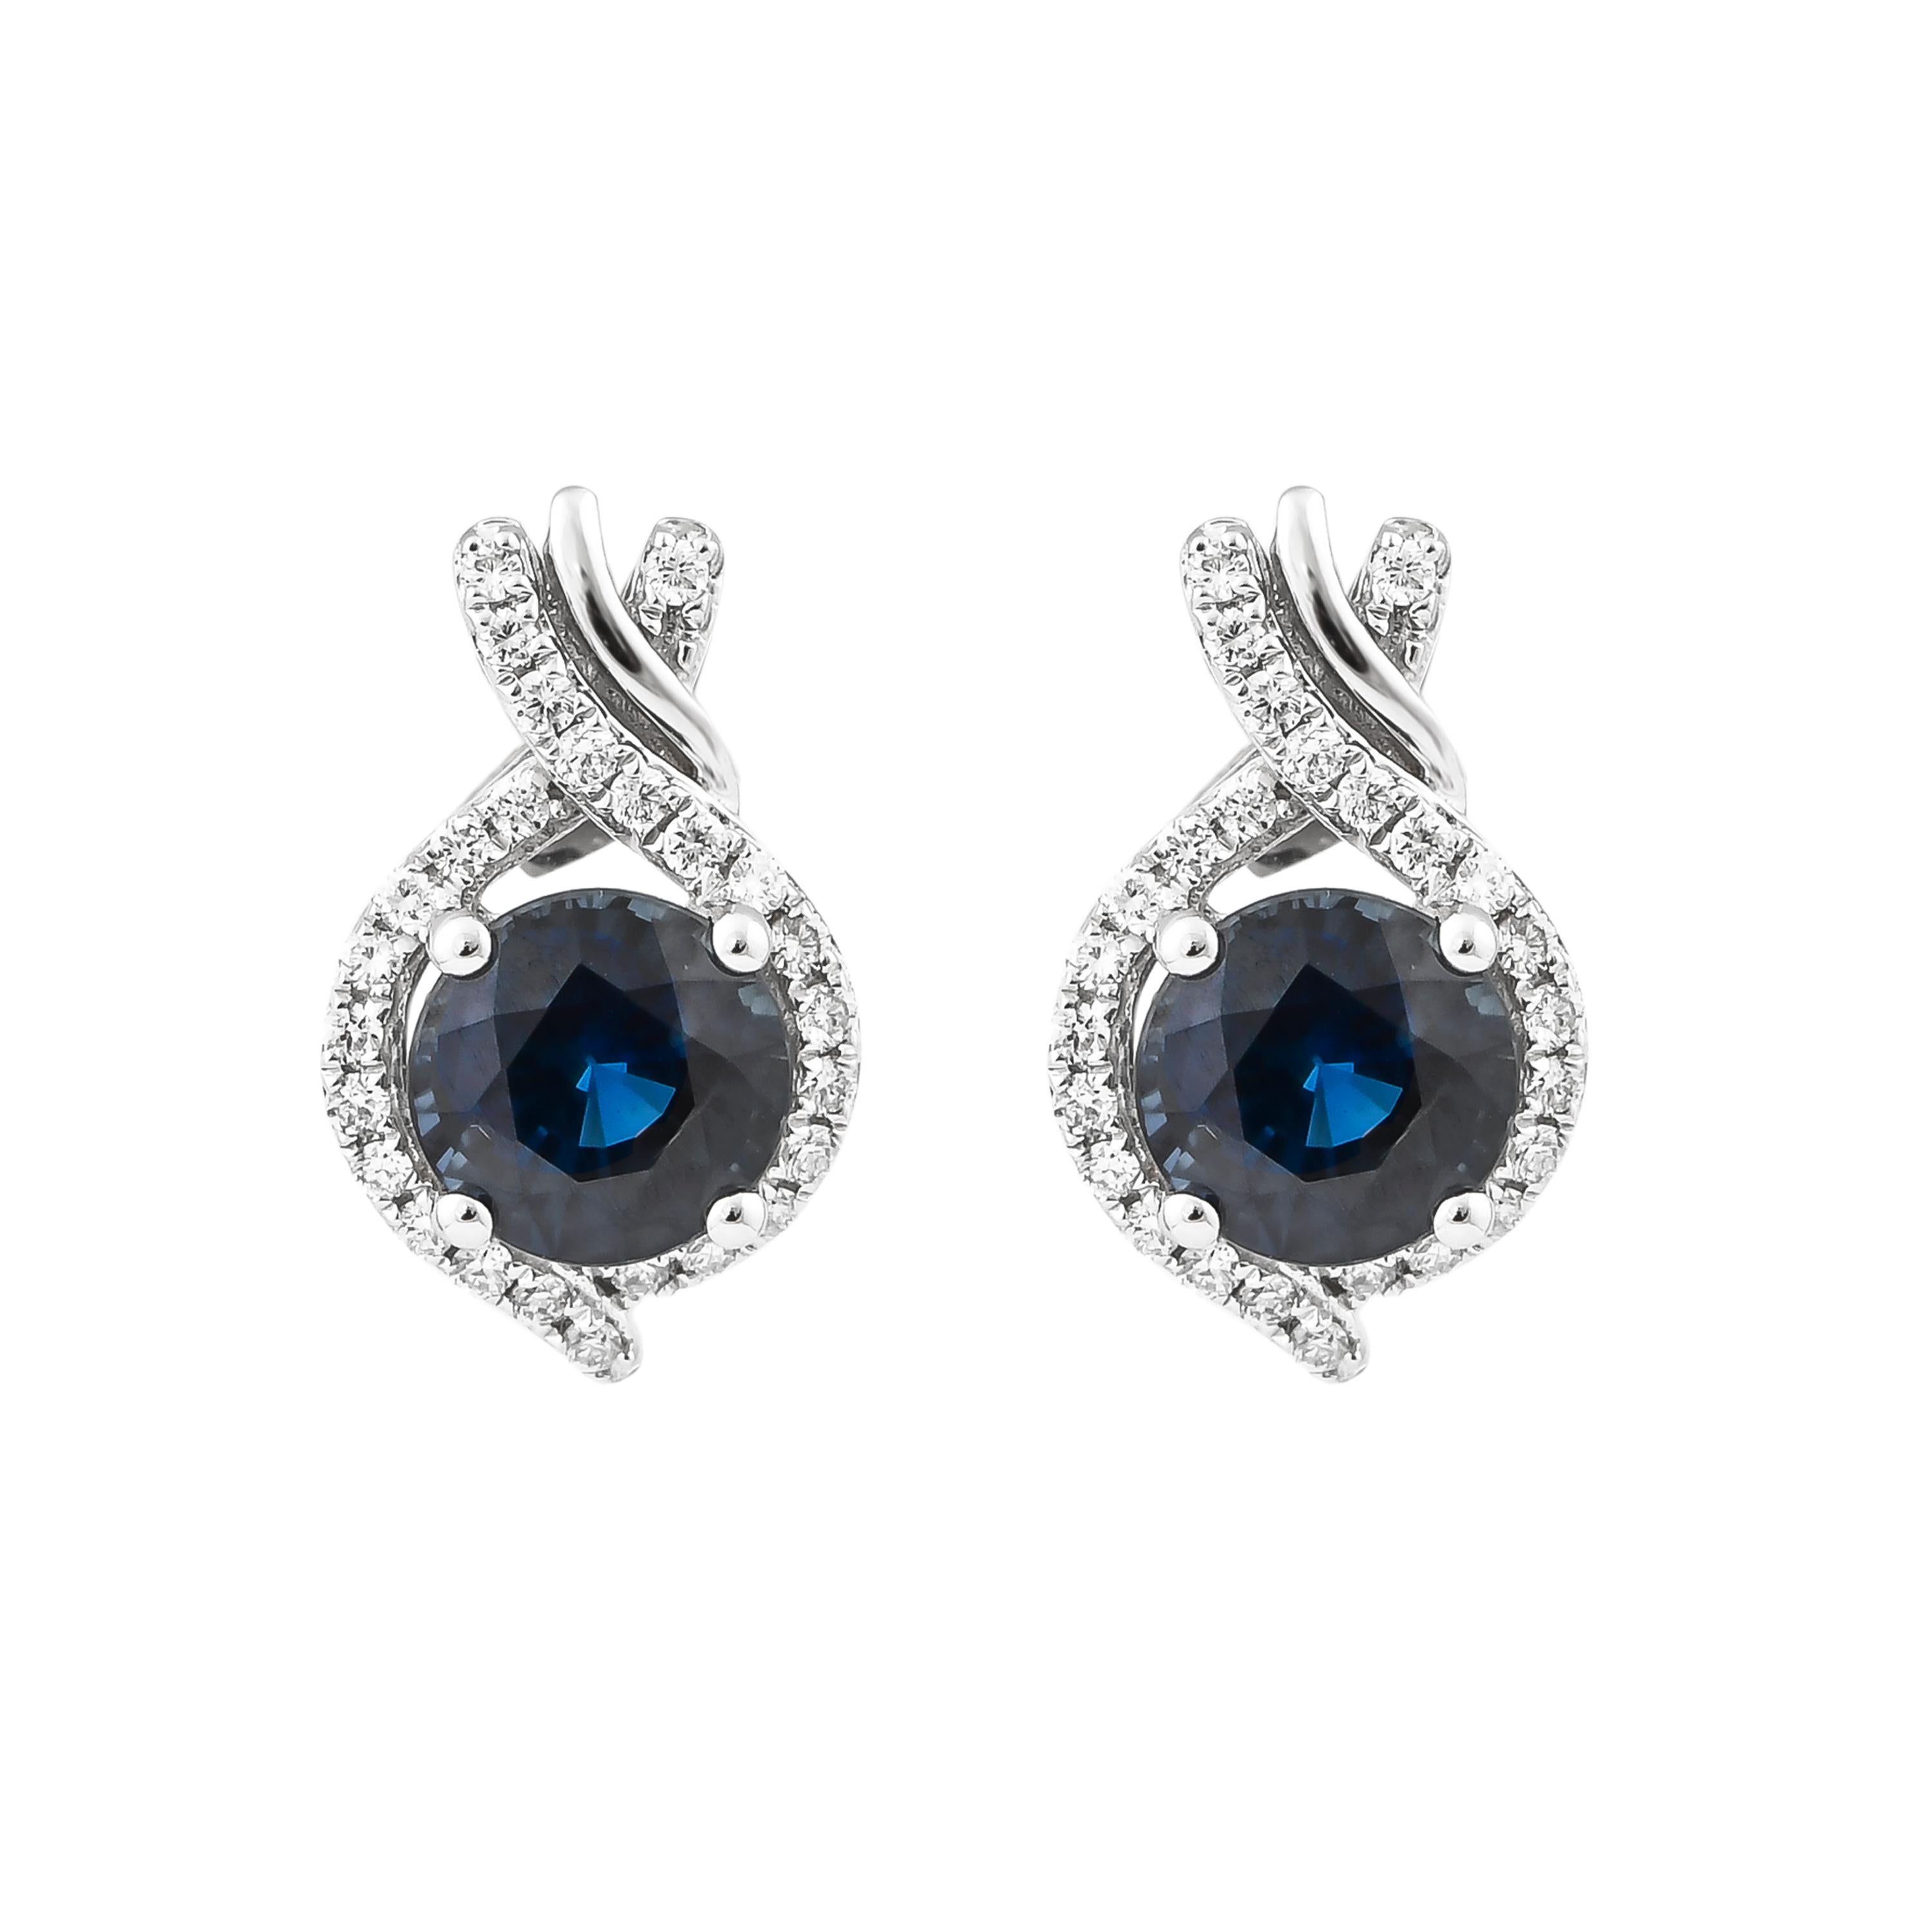 1.9 carat diamond earrings